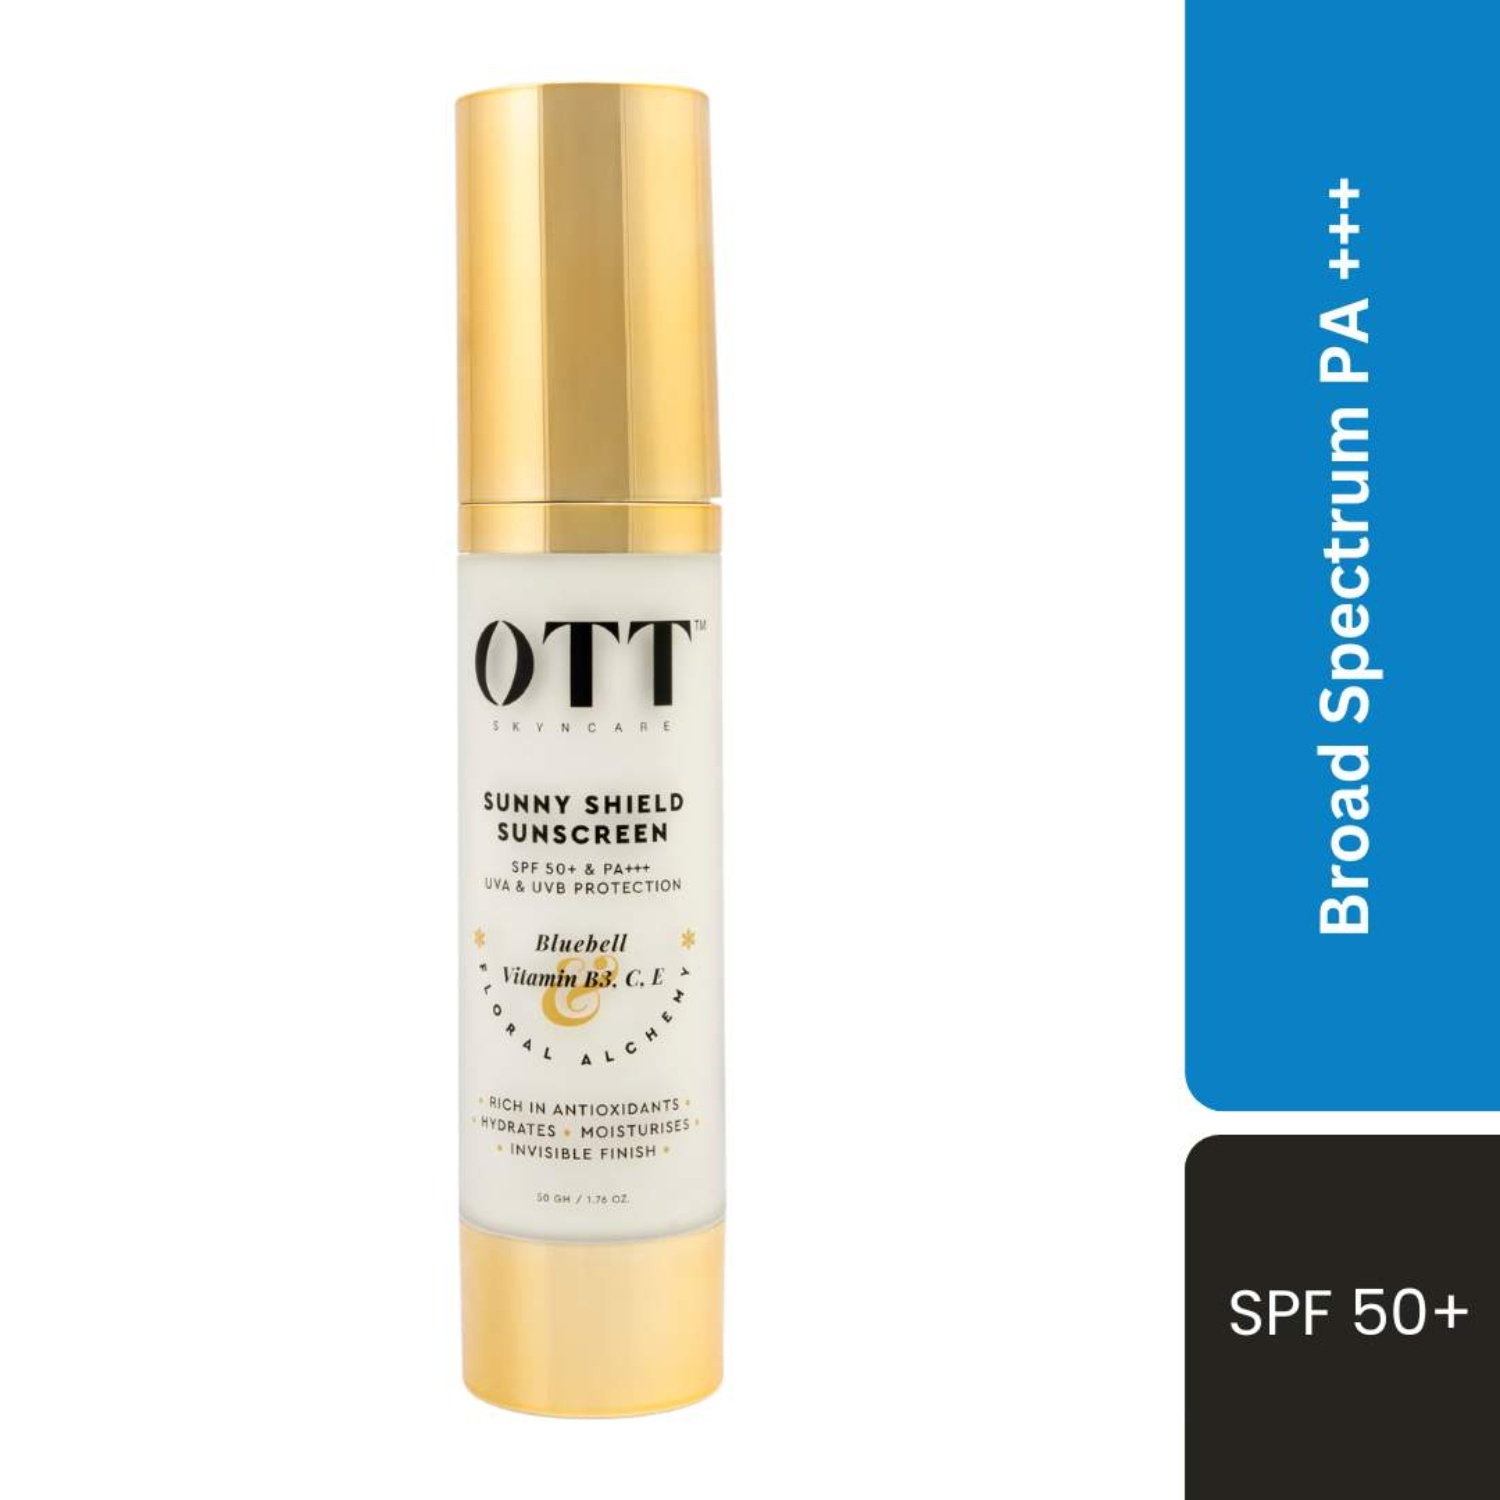 OTT SKYNCARE Sunny Shield Sunscreen SPF 50+ (50ml)